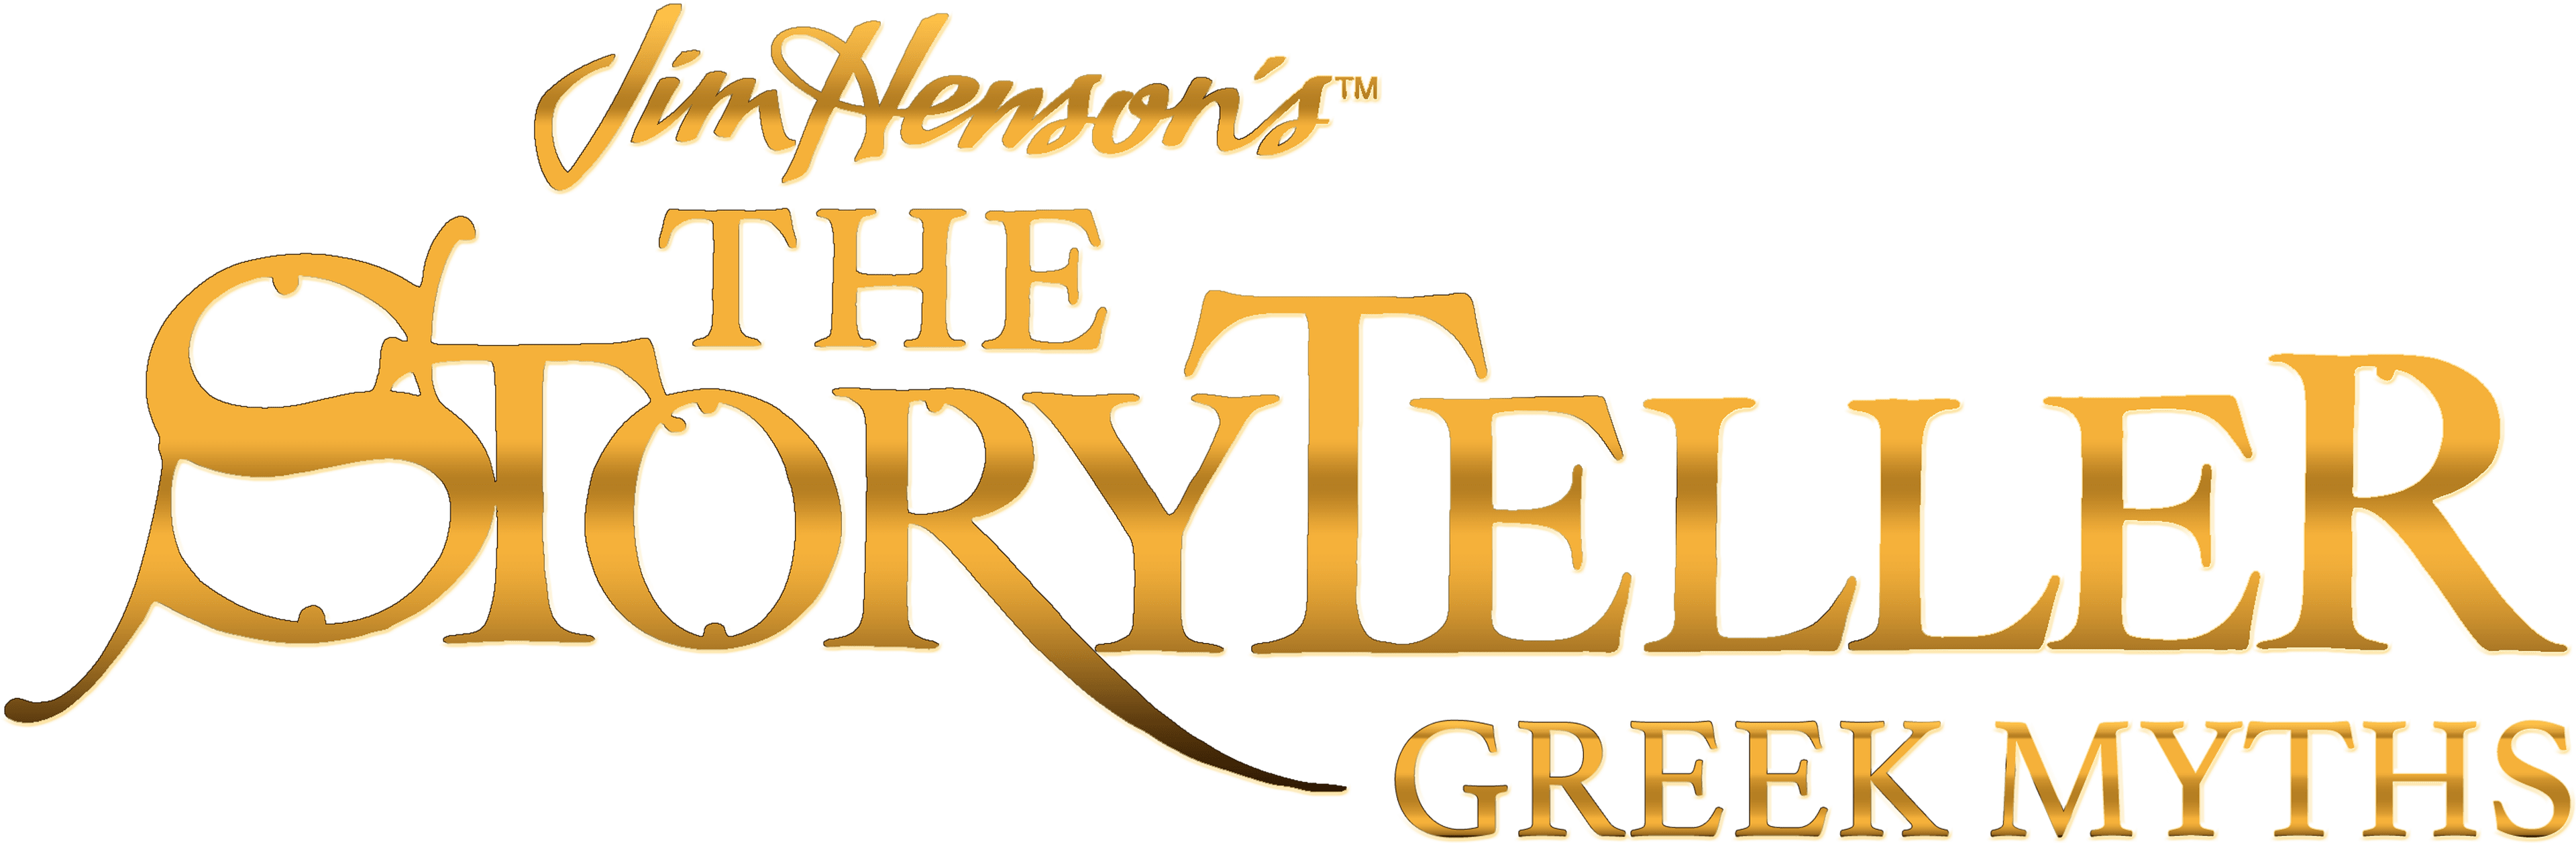 The Storyteller: Greek Myths logo